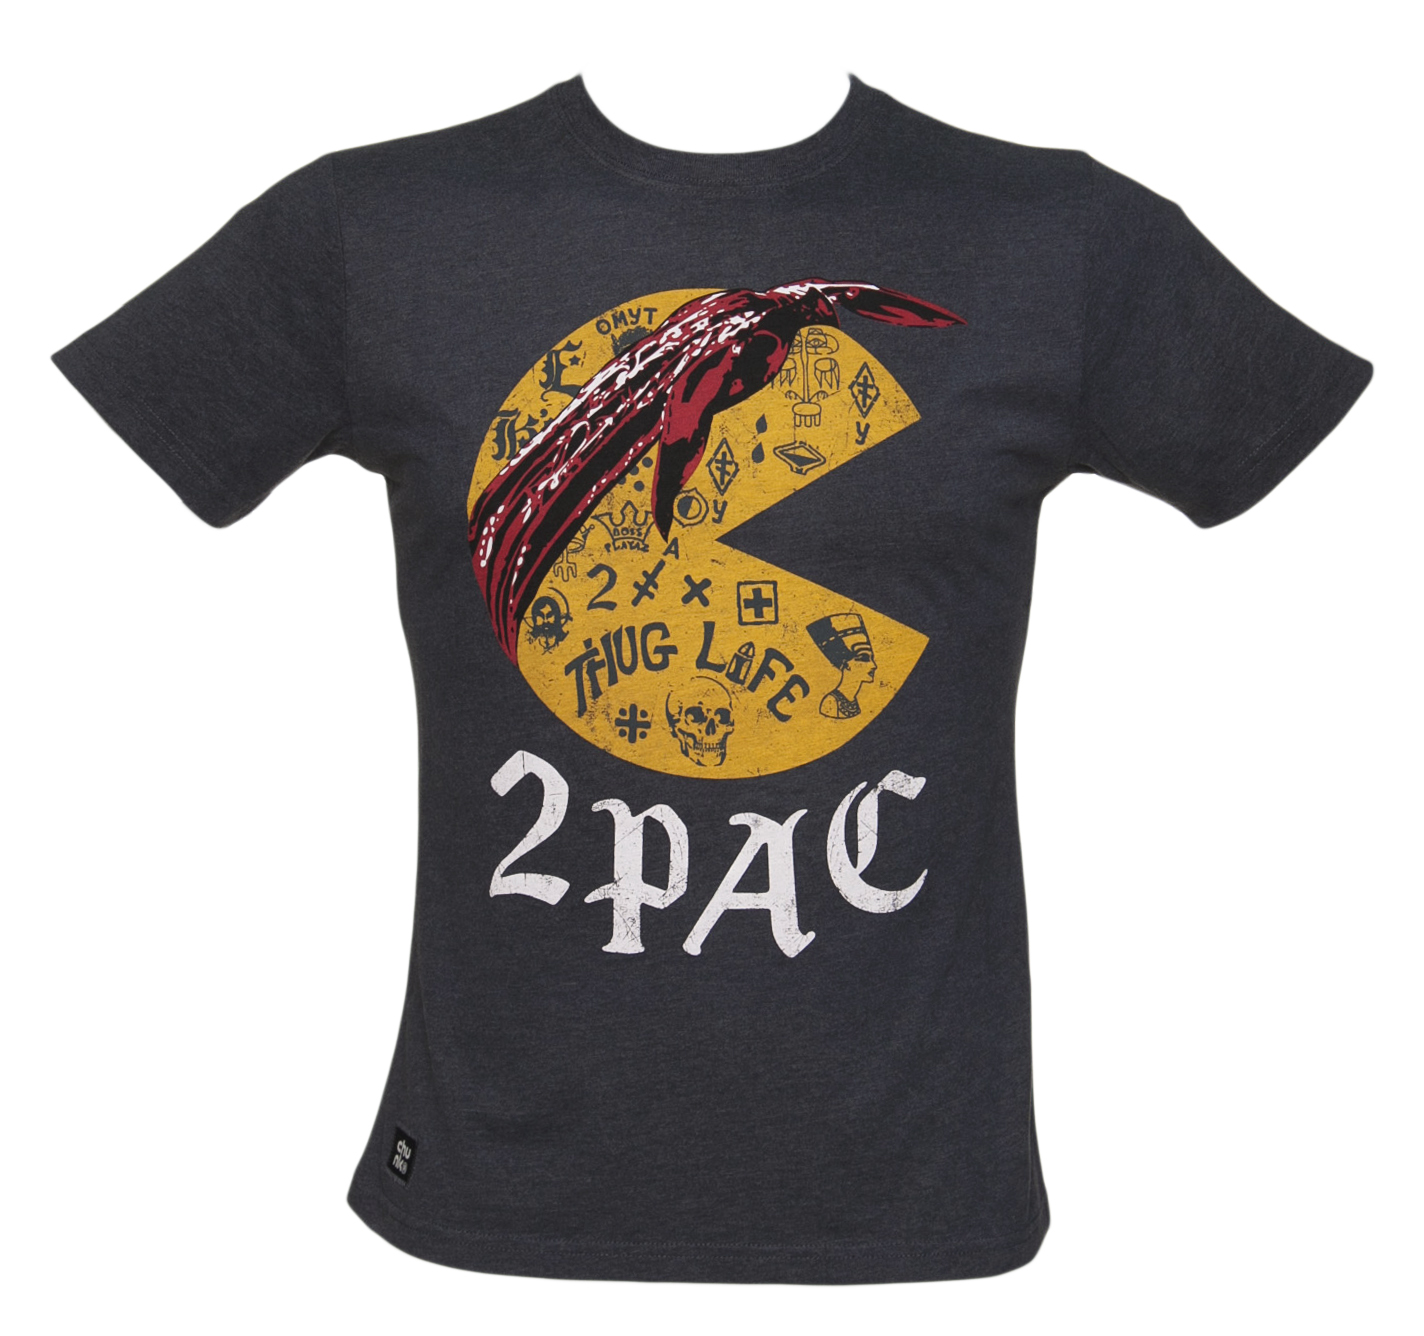 Mens Charcoal Marl 2 Pac T-Shirt from Chunk